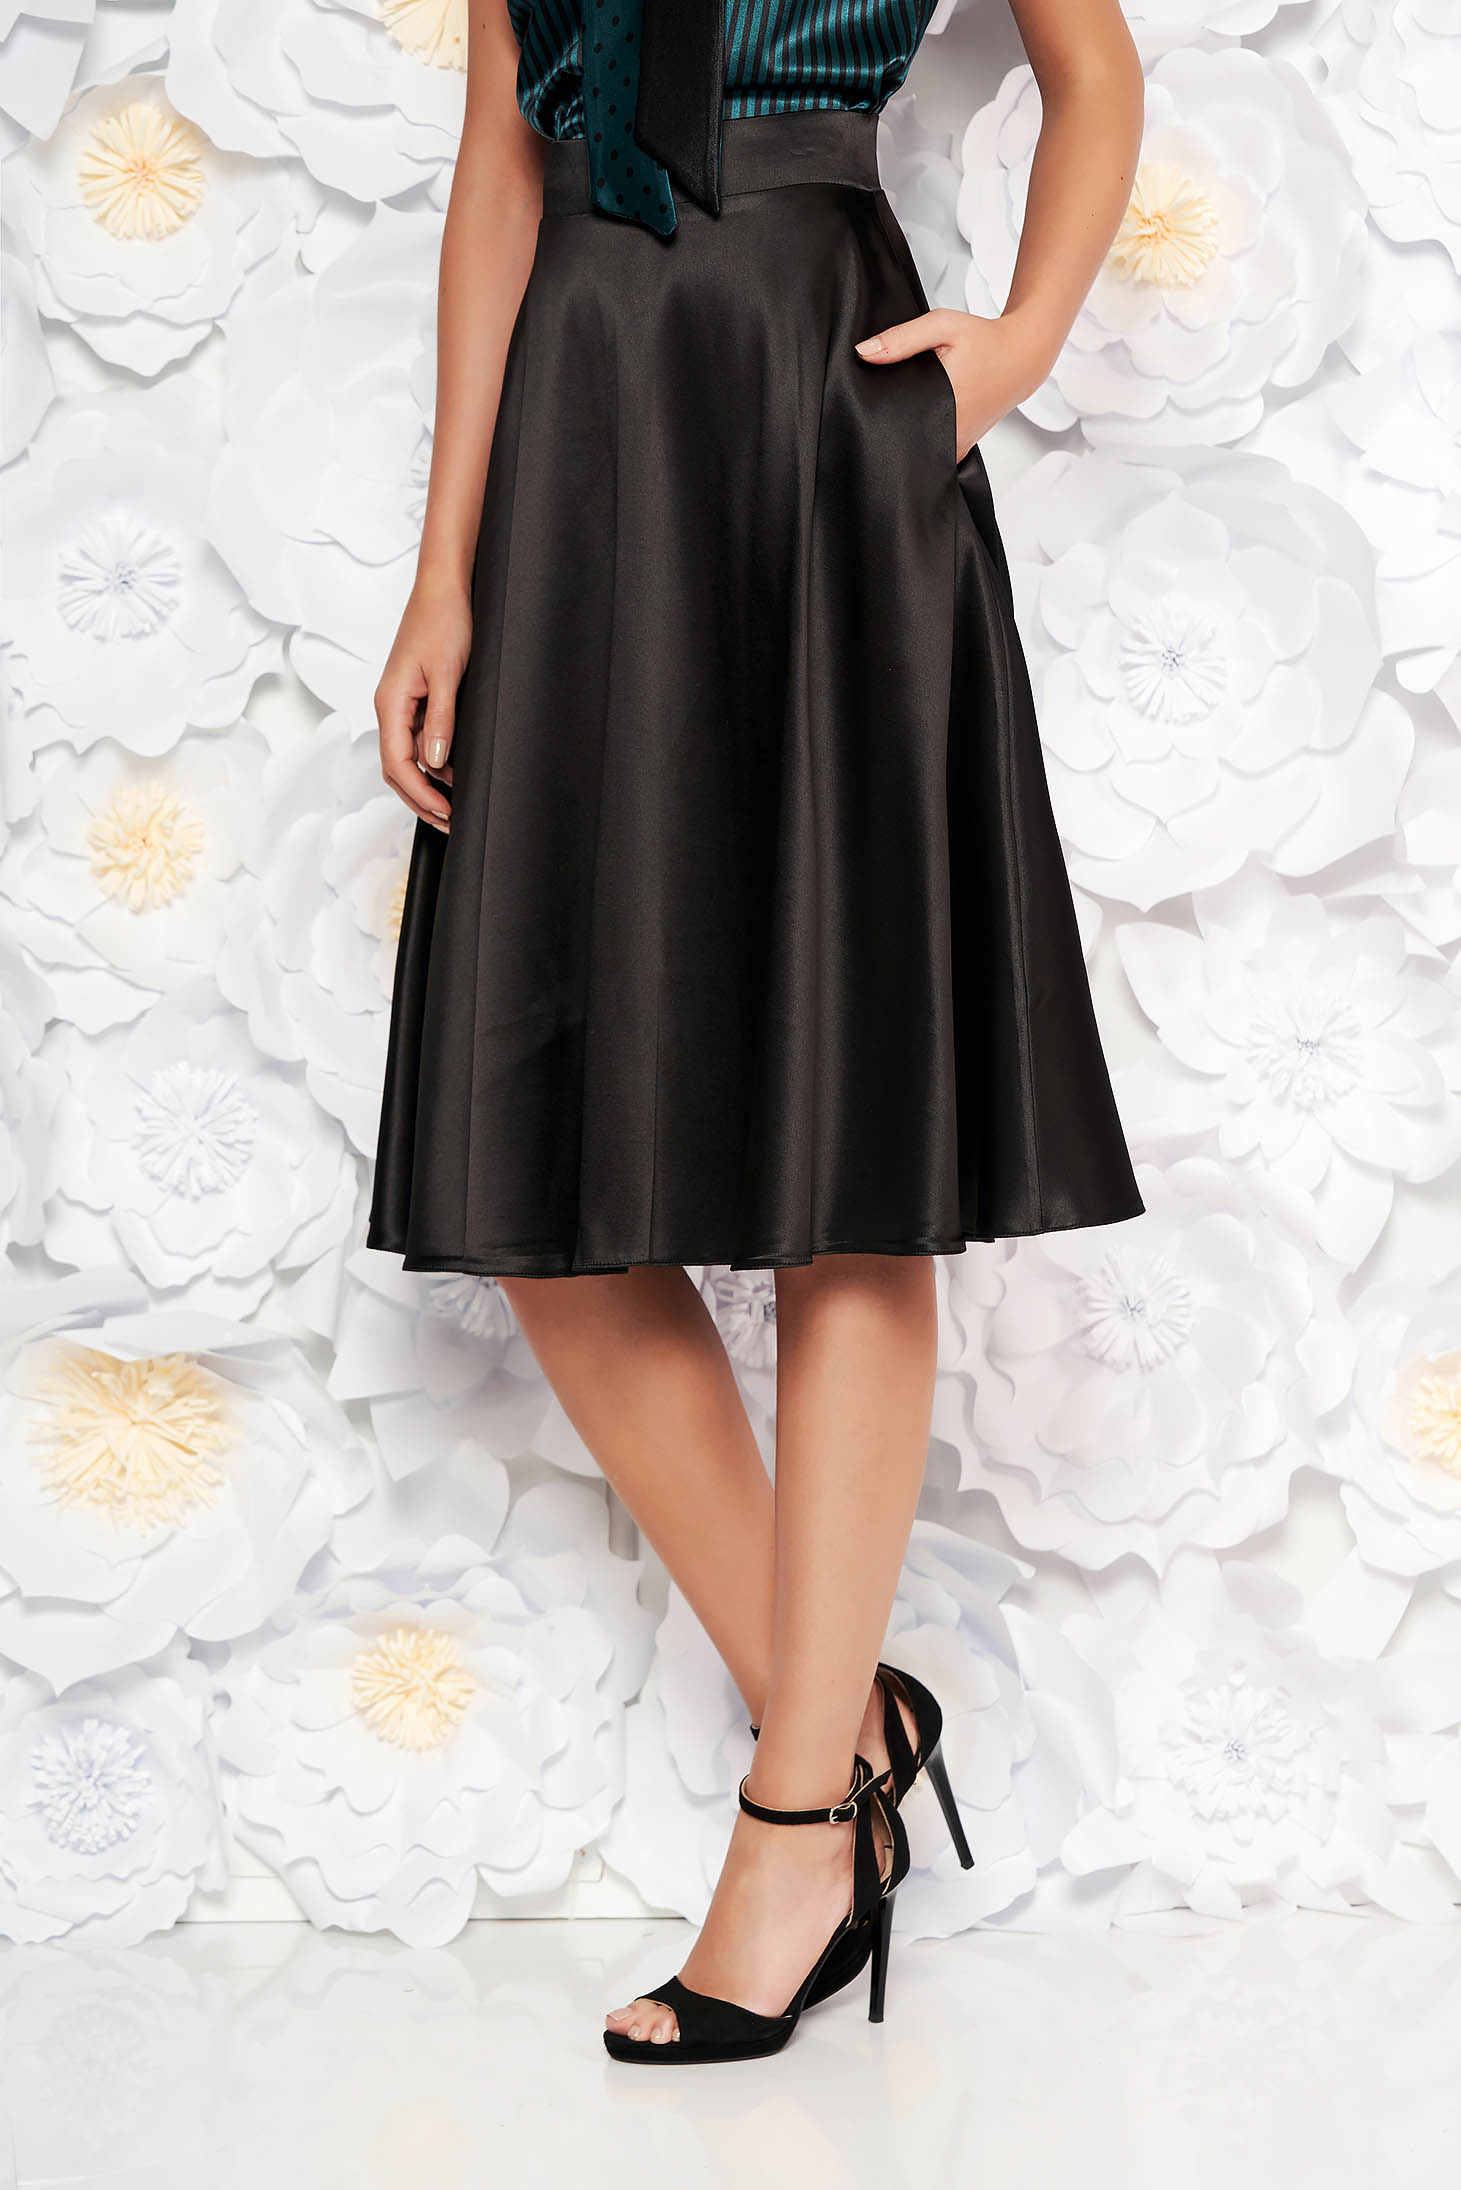 Starshiners Black Elegant High Waisted Cloche Skirt From Satin 9947